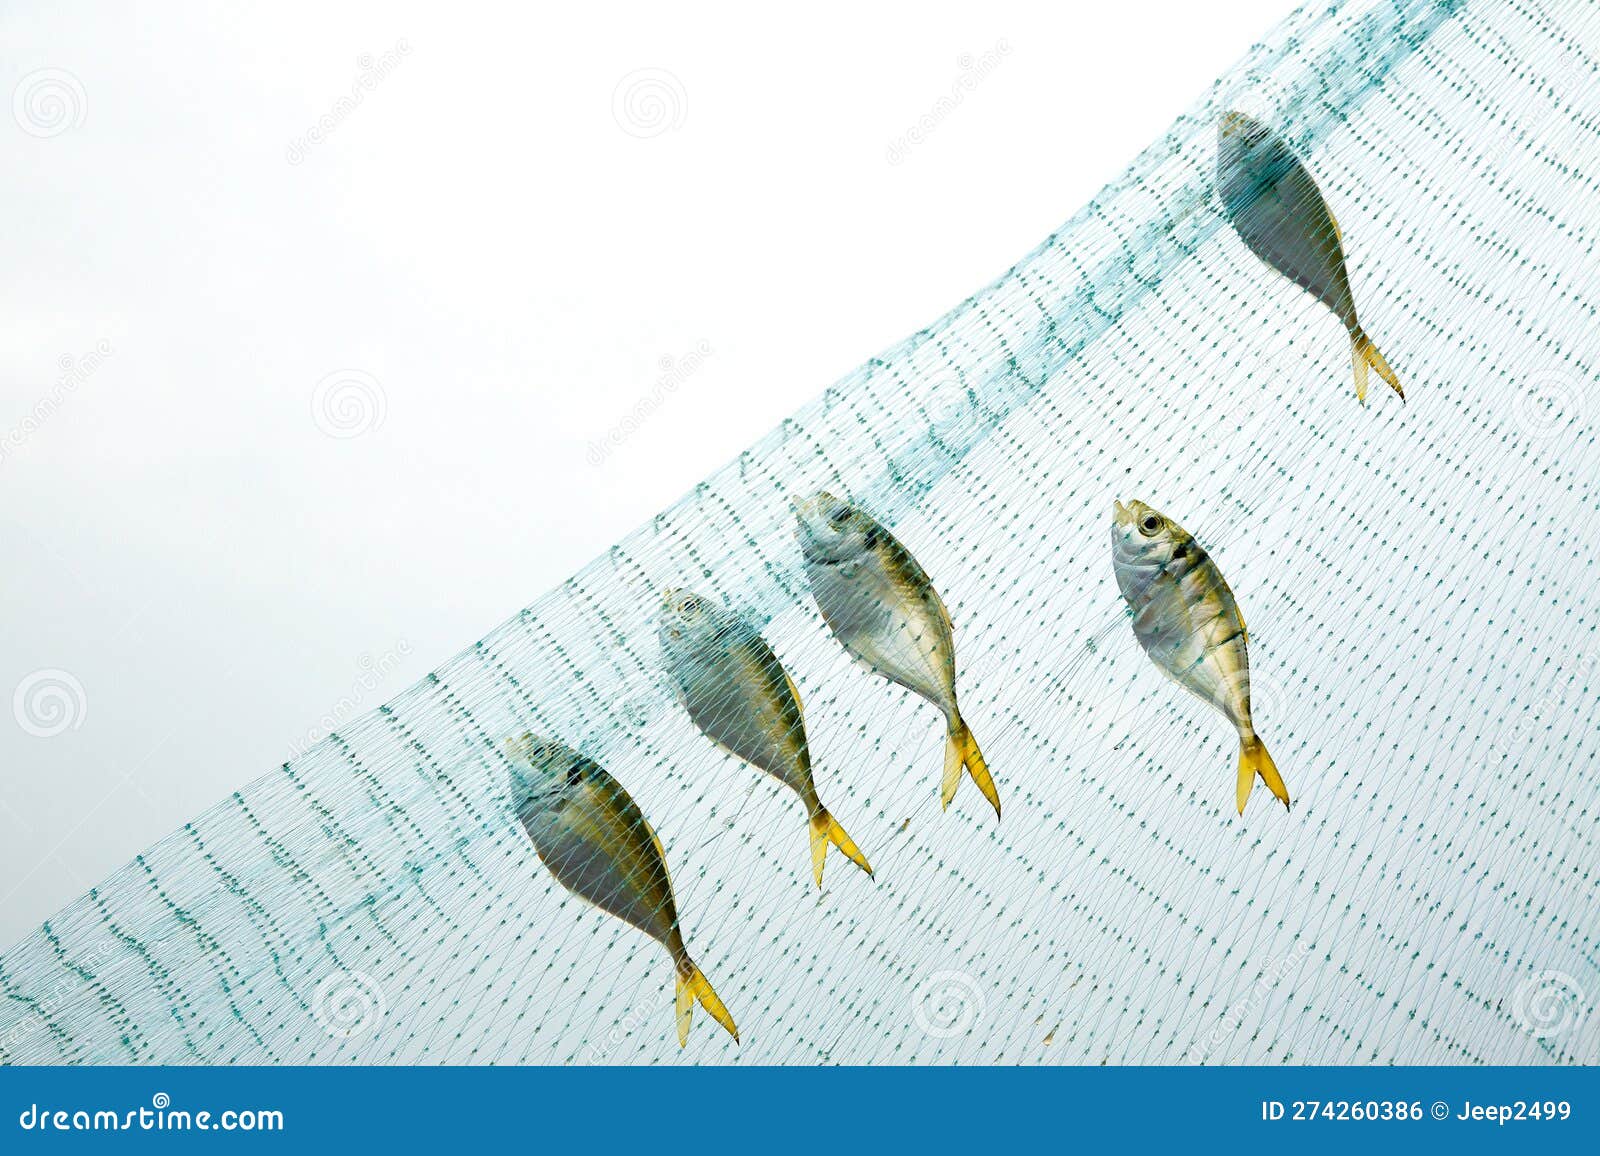 https://thumbs.dreamstime.com/z/sea-fish-nets-white-background-sea-fish-nets-white-background-274260386.jpg